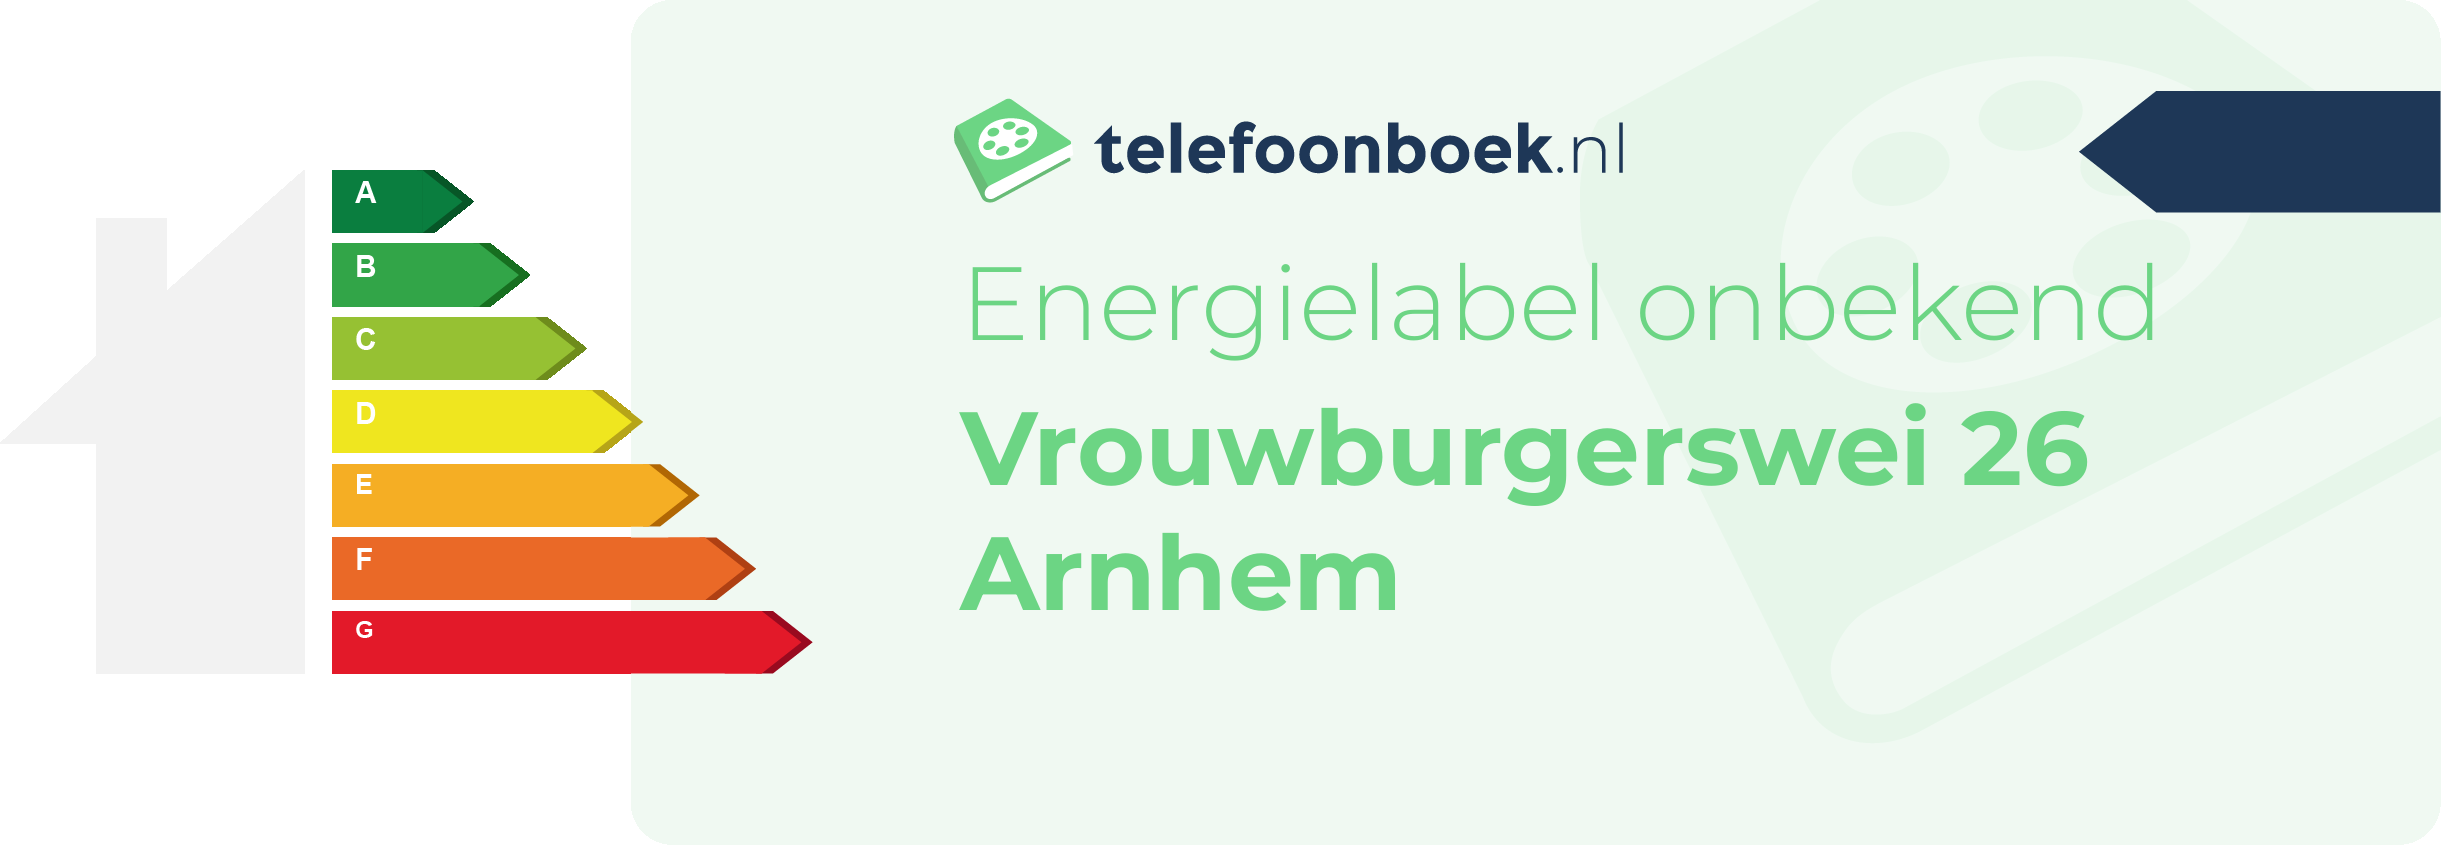 Energielabel Vrouwburgerswei 26 Arnhem